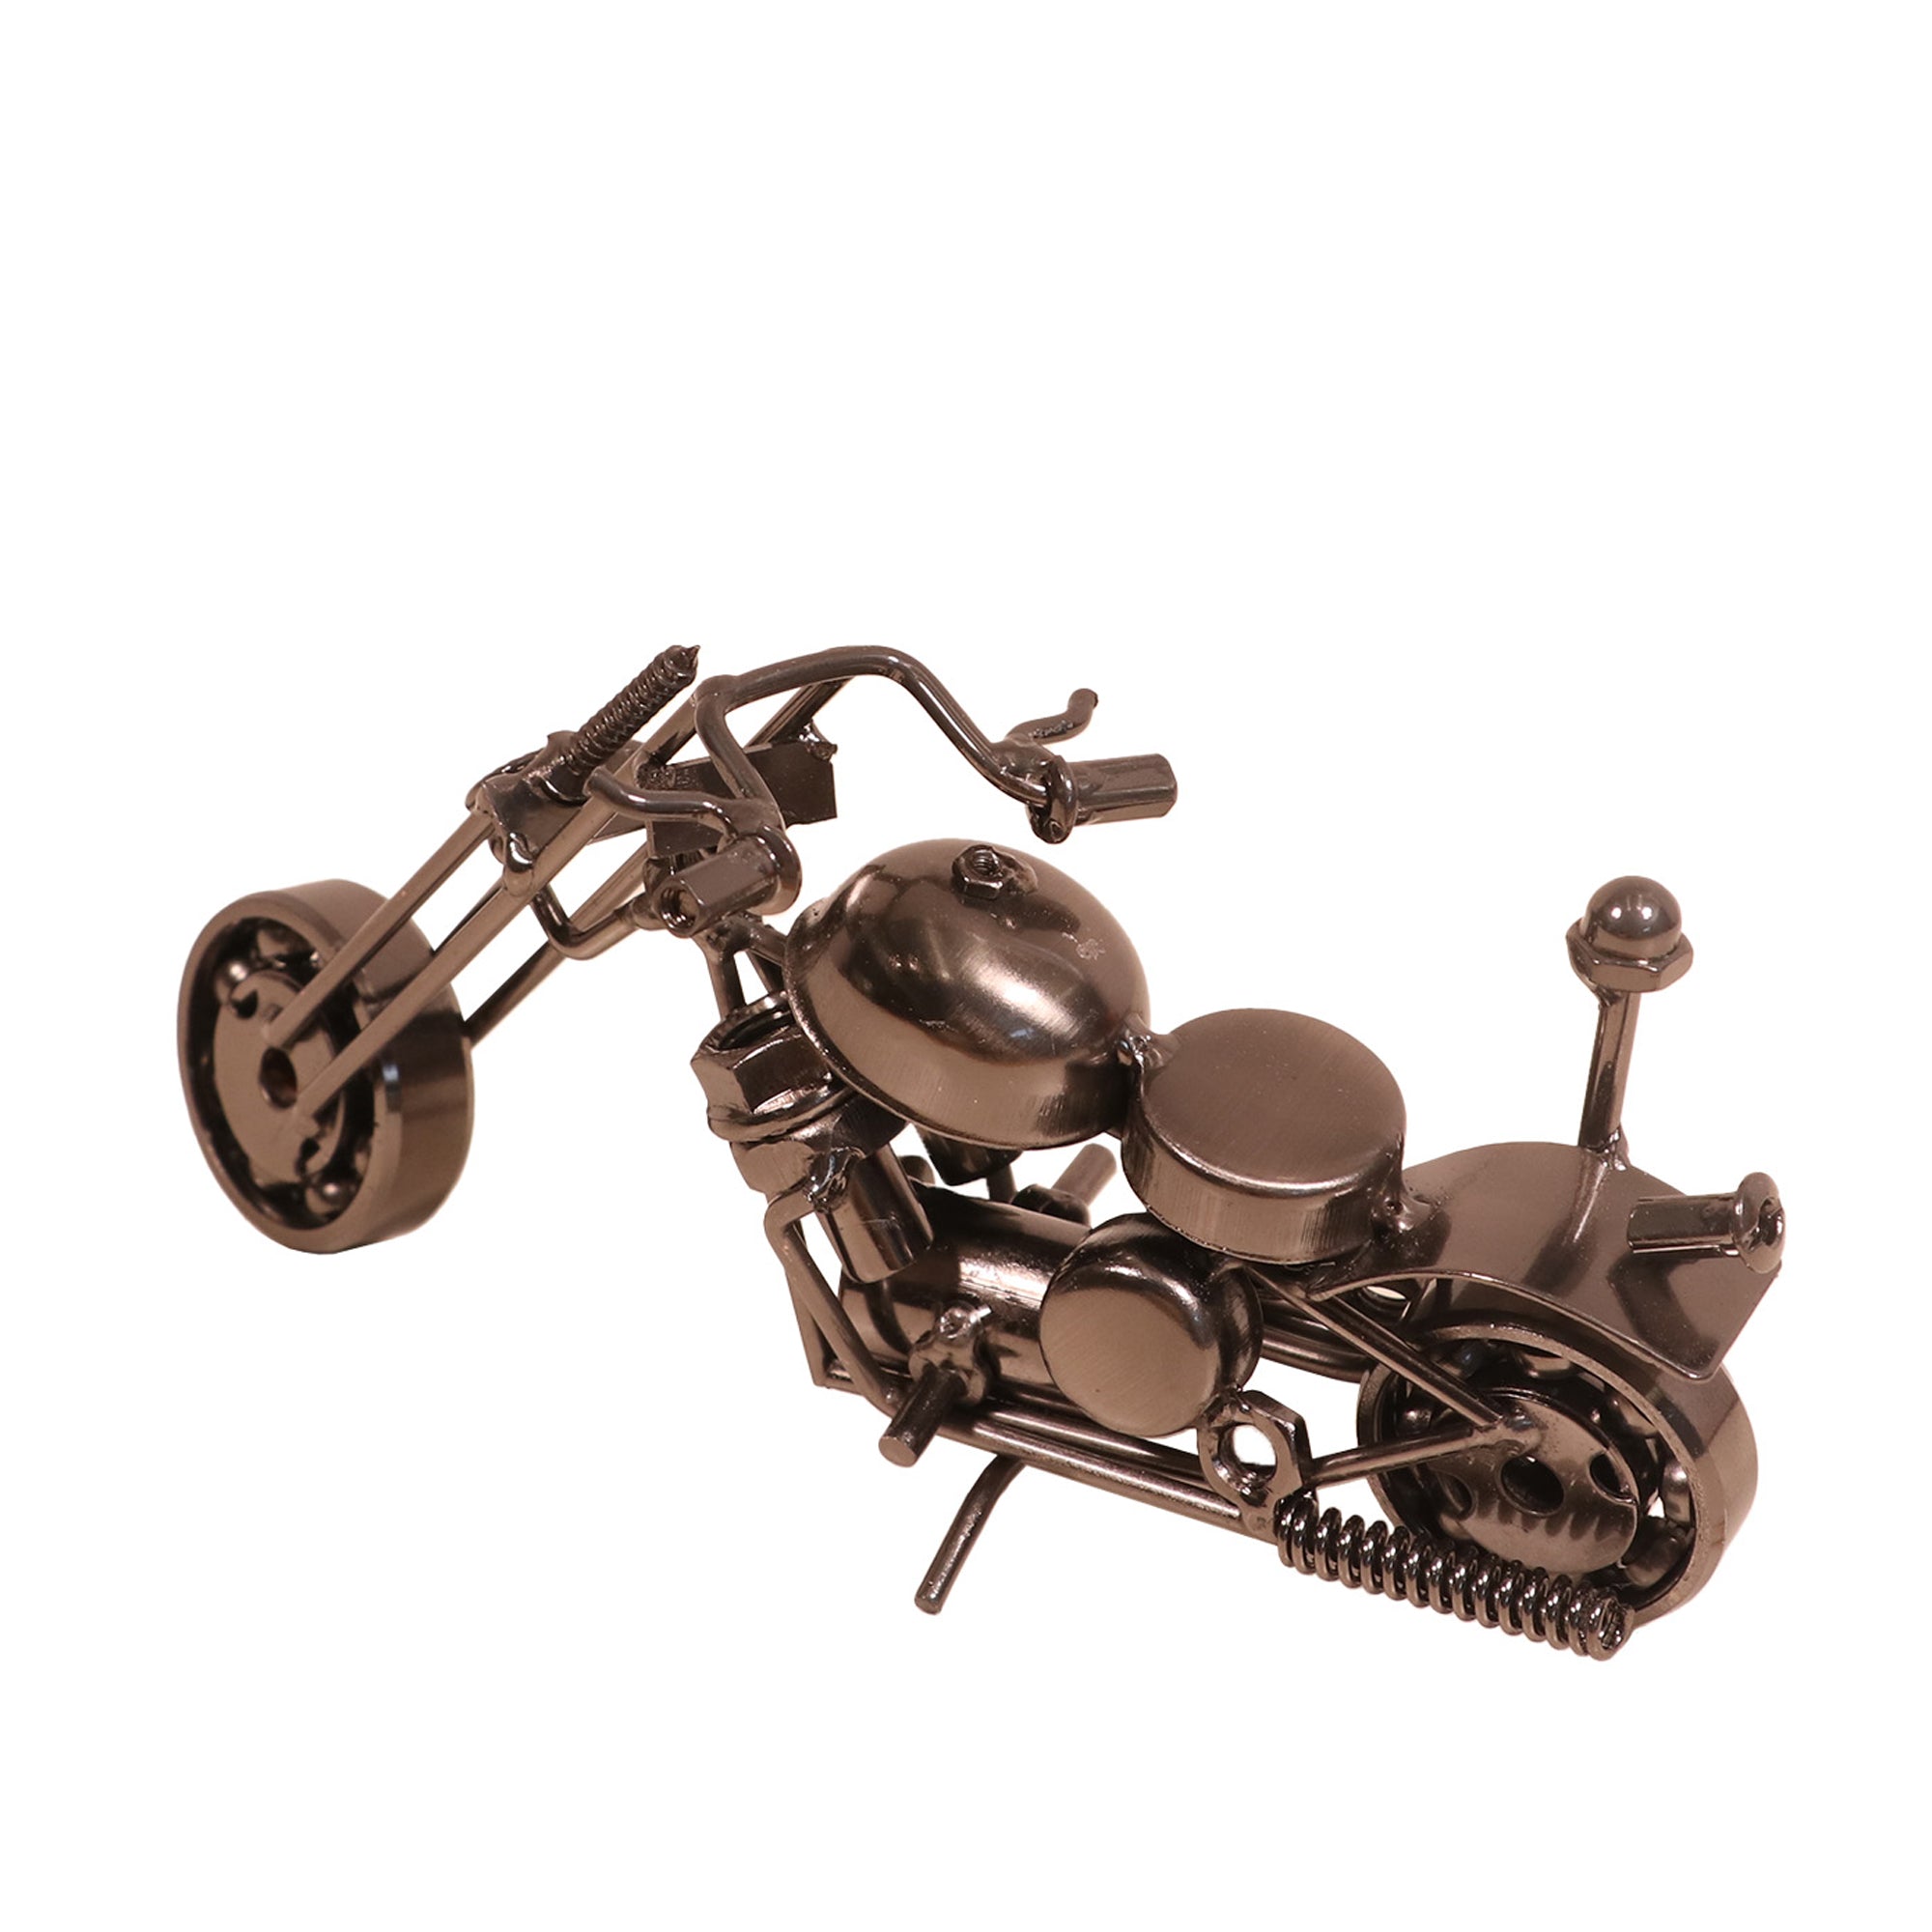 Metallic Long head decorative bike Miniature Vehicle figurine